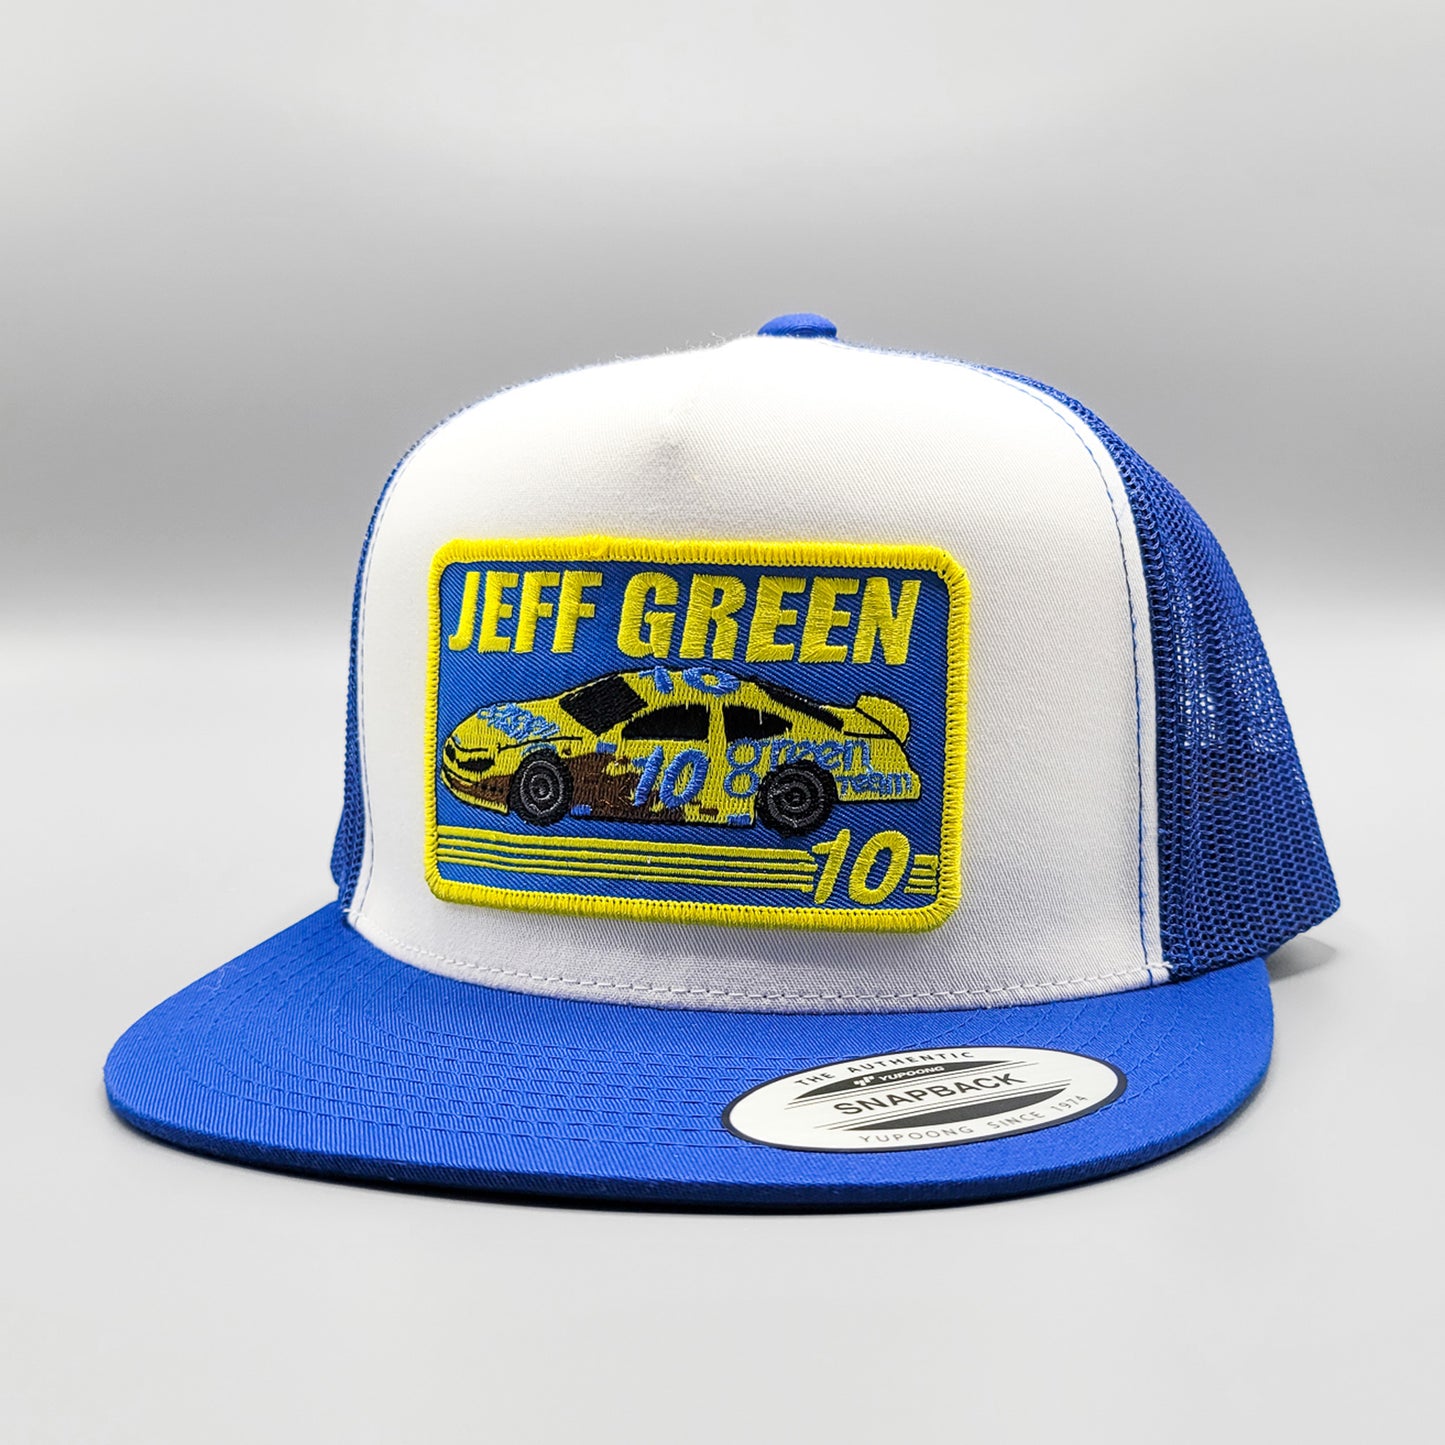 Jeff Green Nascar Racing Trucker Hat